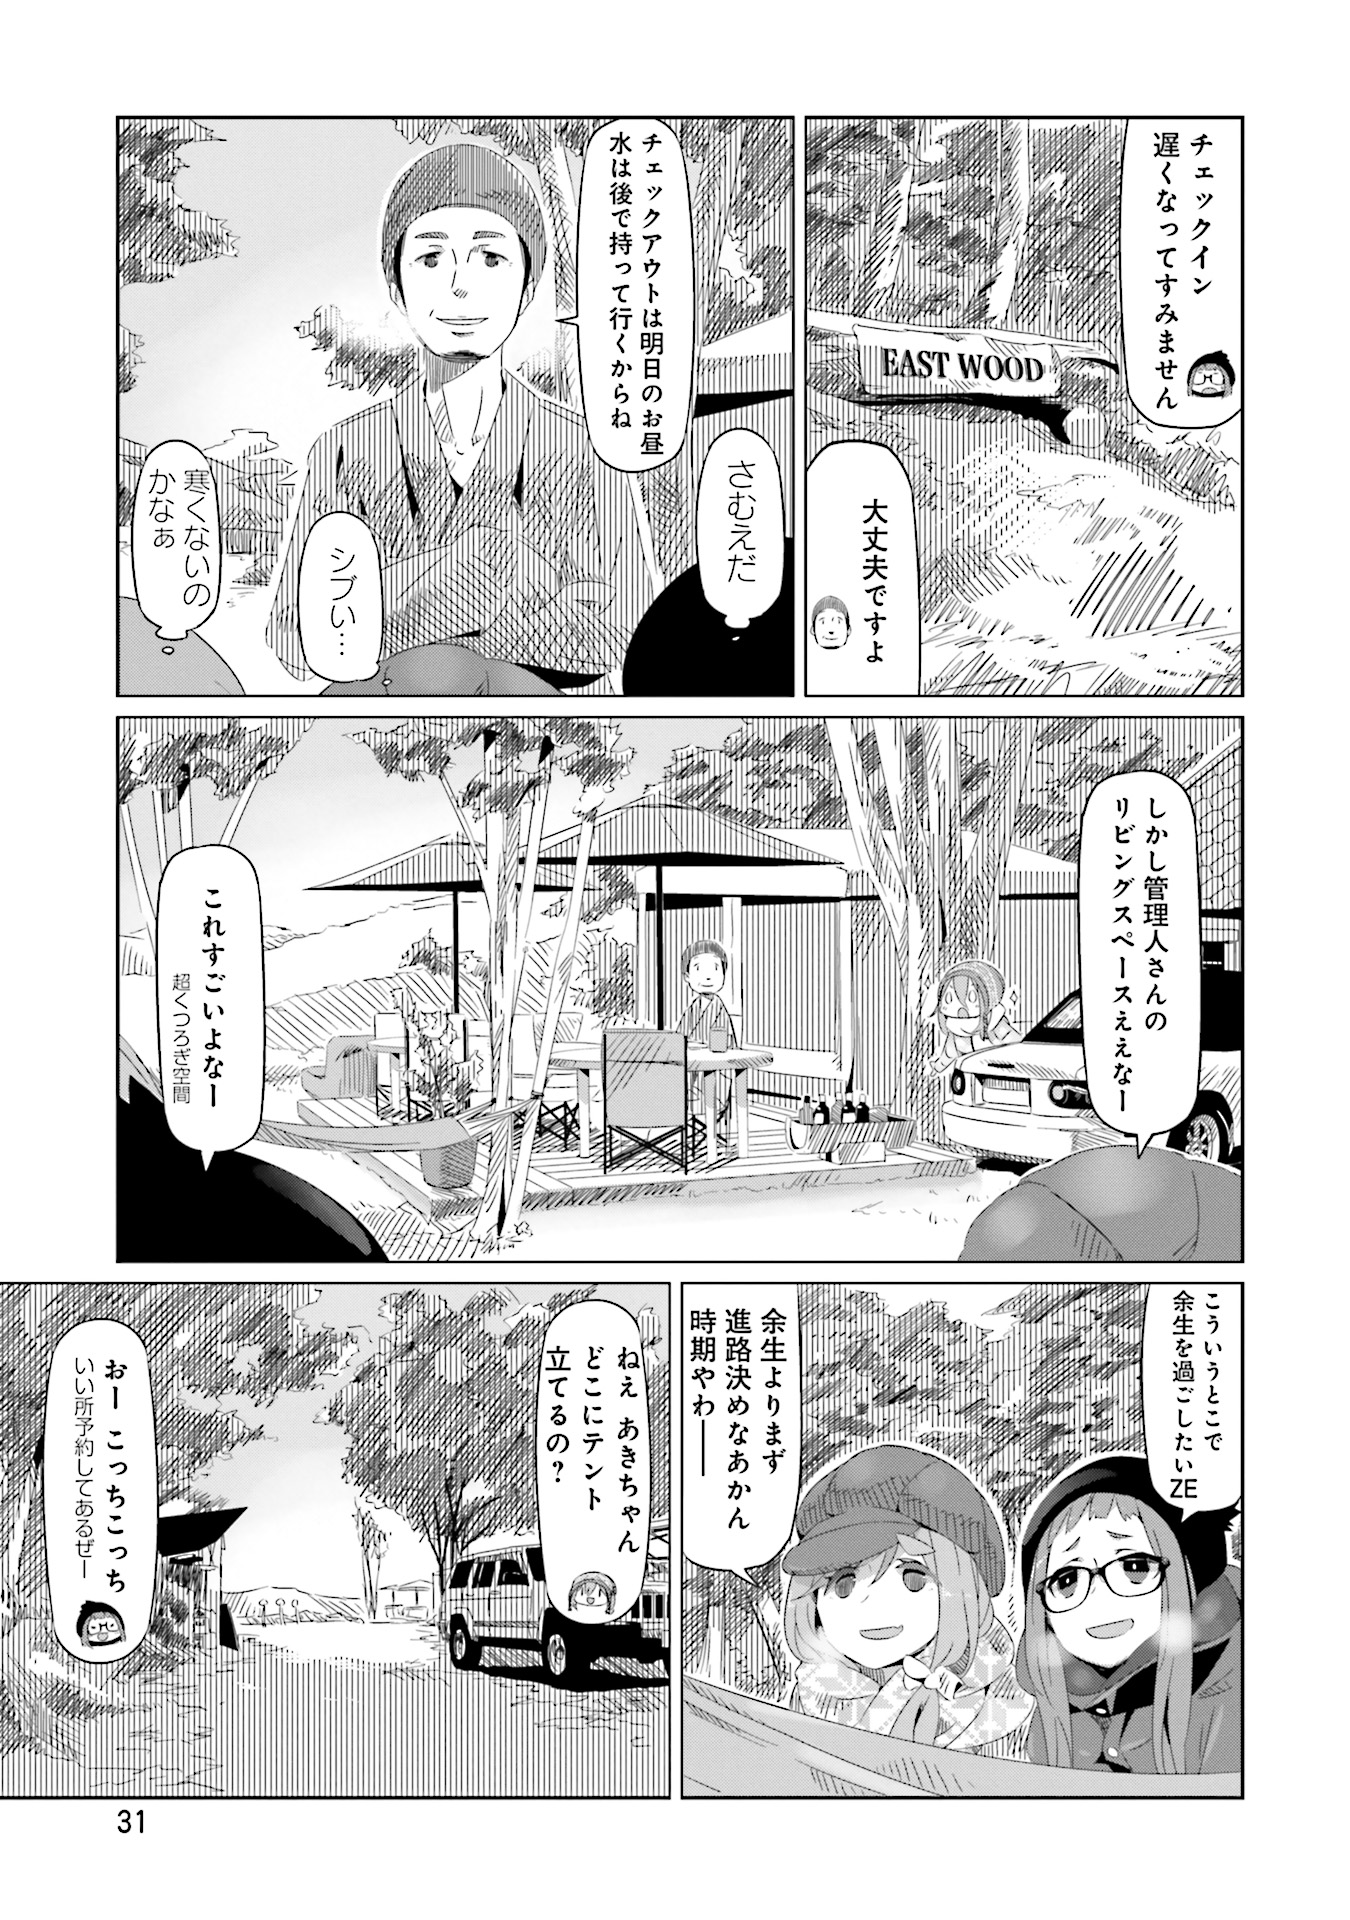 Yuru Camp - Chapter 8 - Page 3